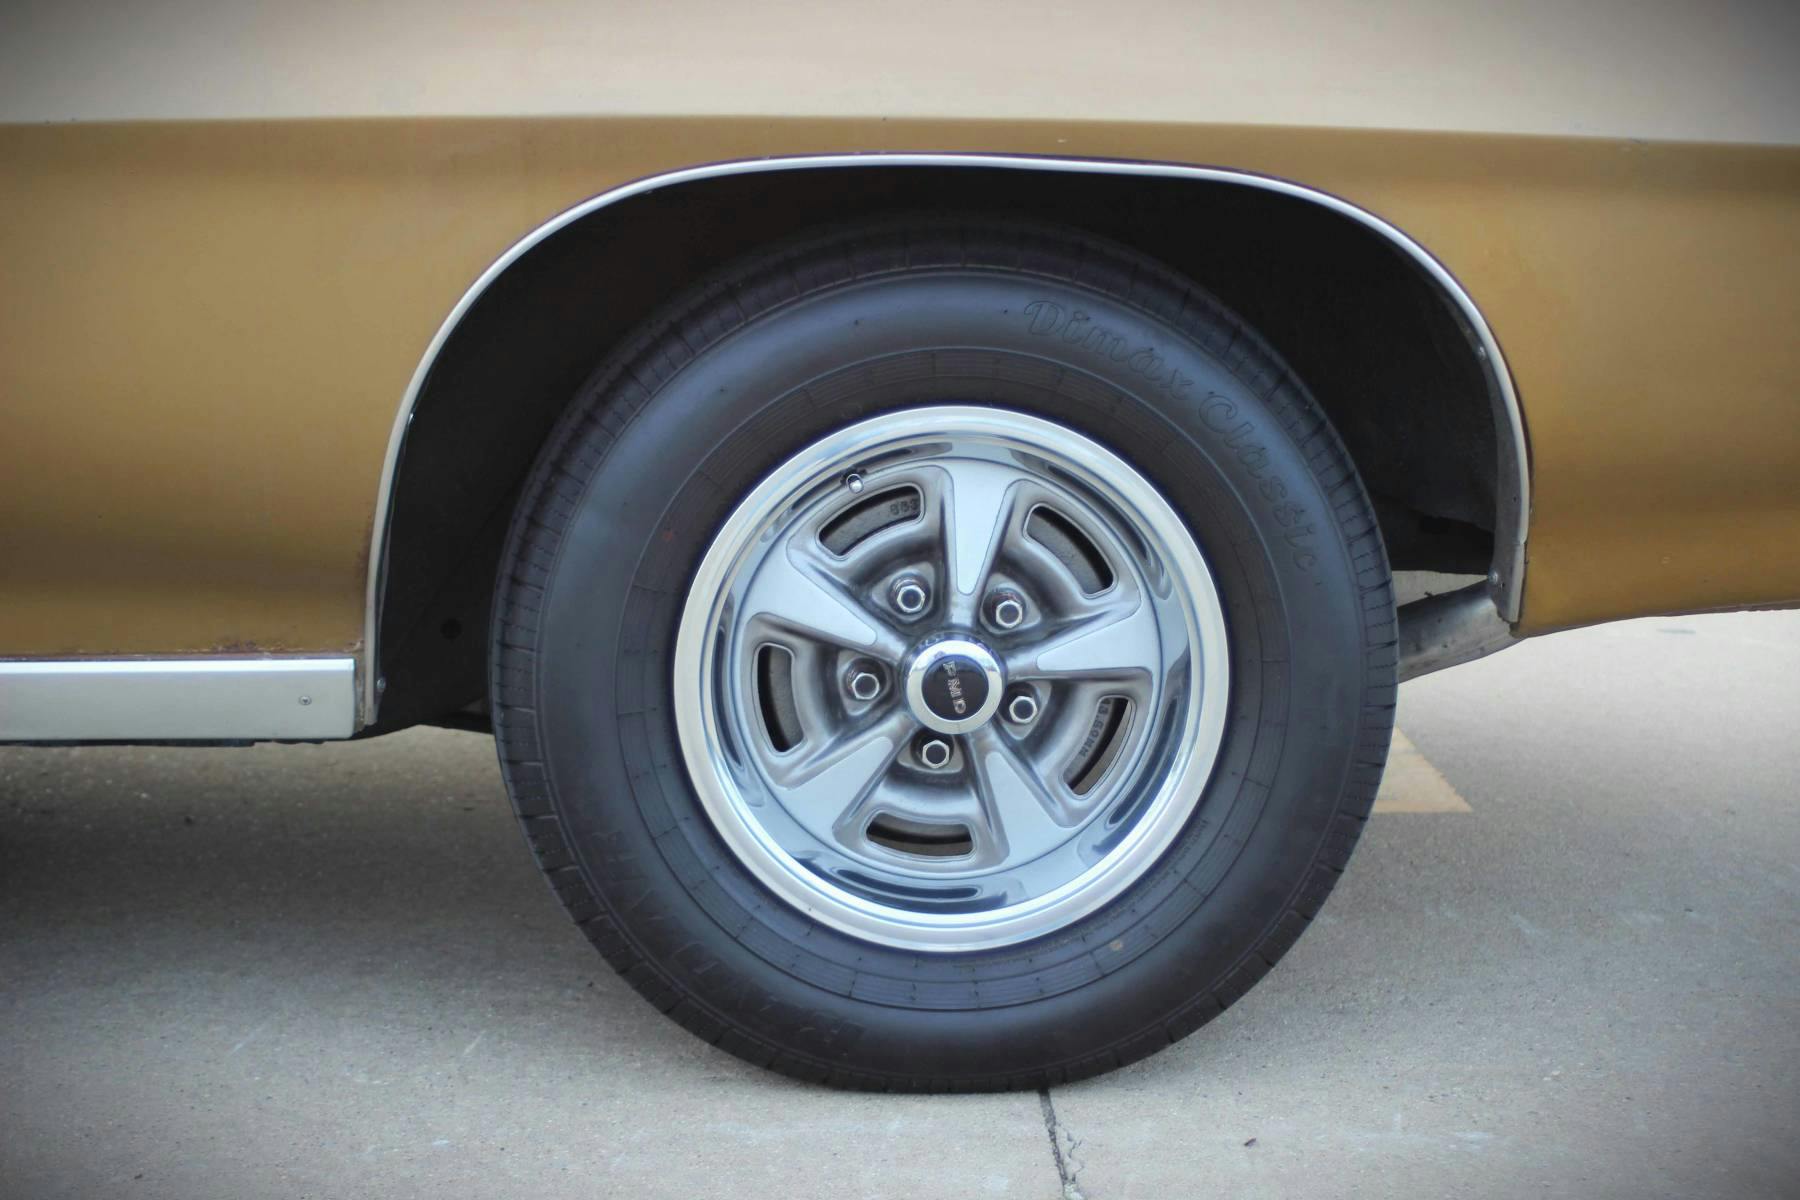 1970 Pontiac GTO Ram Air III wheel tire side